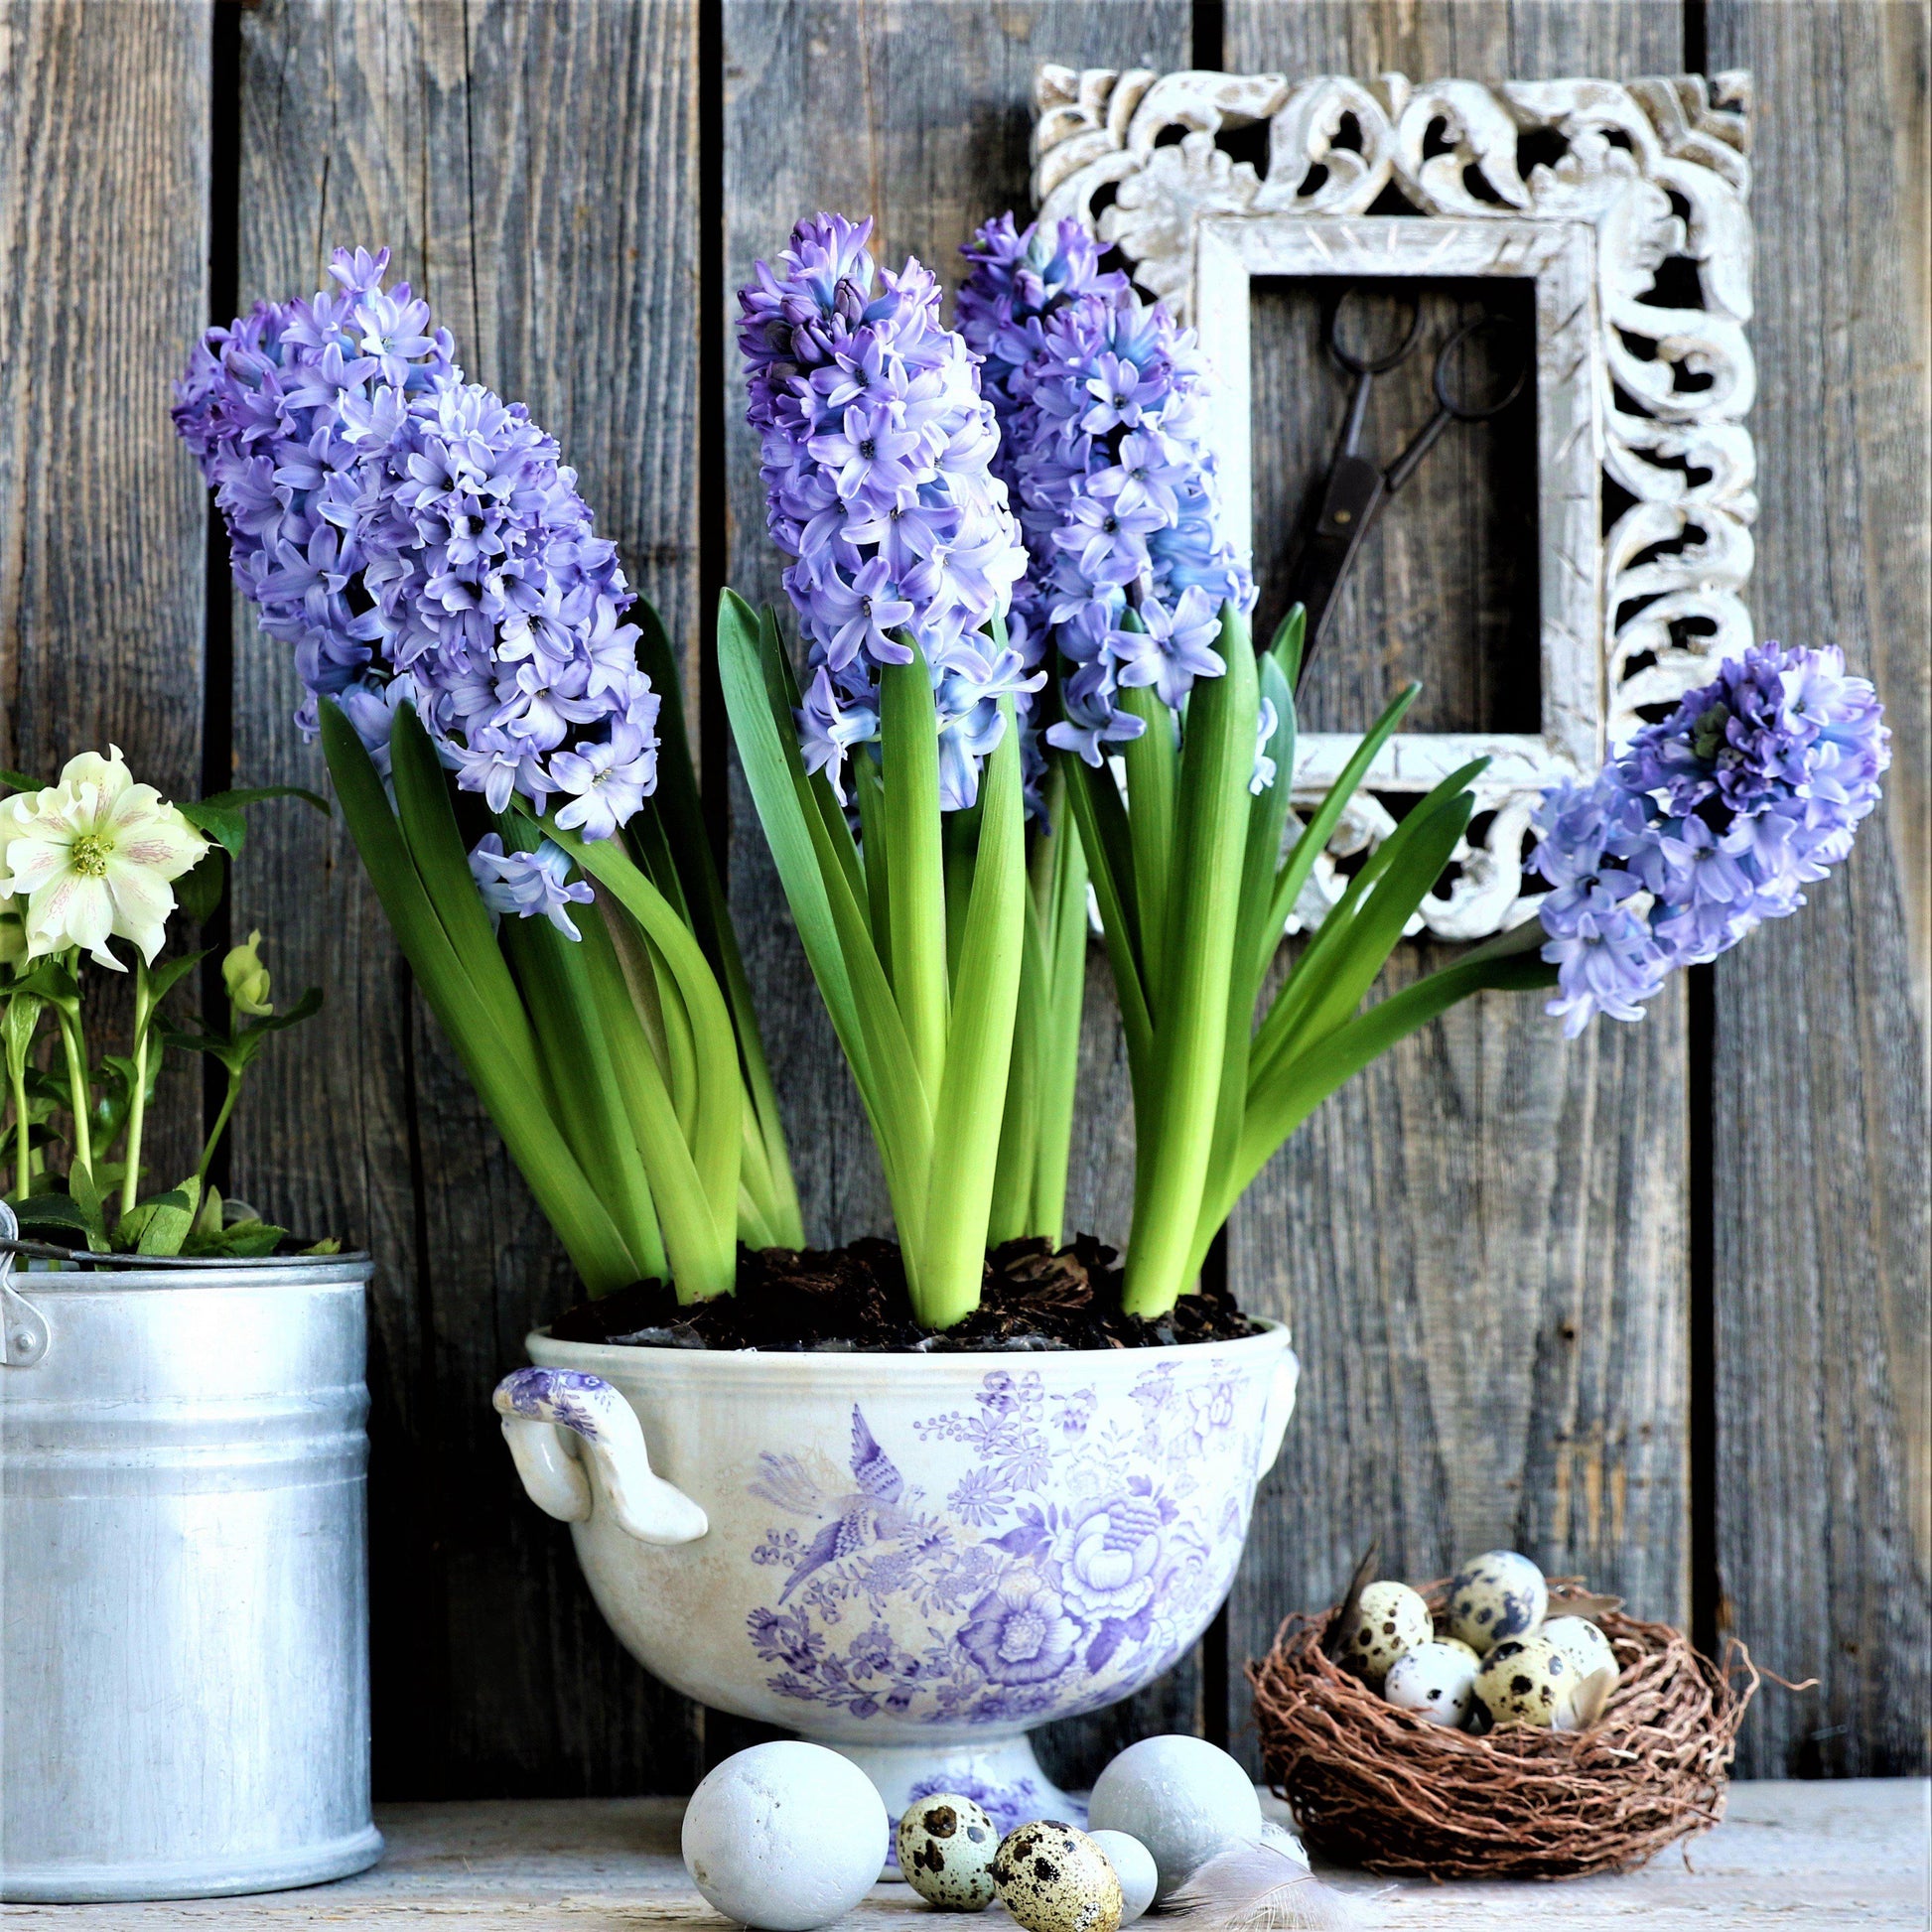 Blue hyacinths in a pot